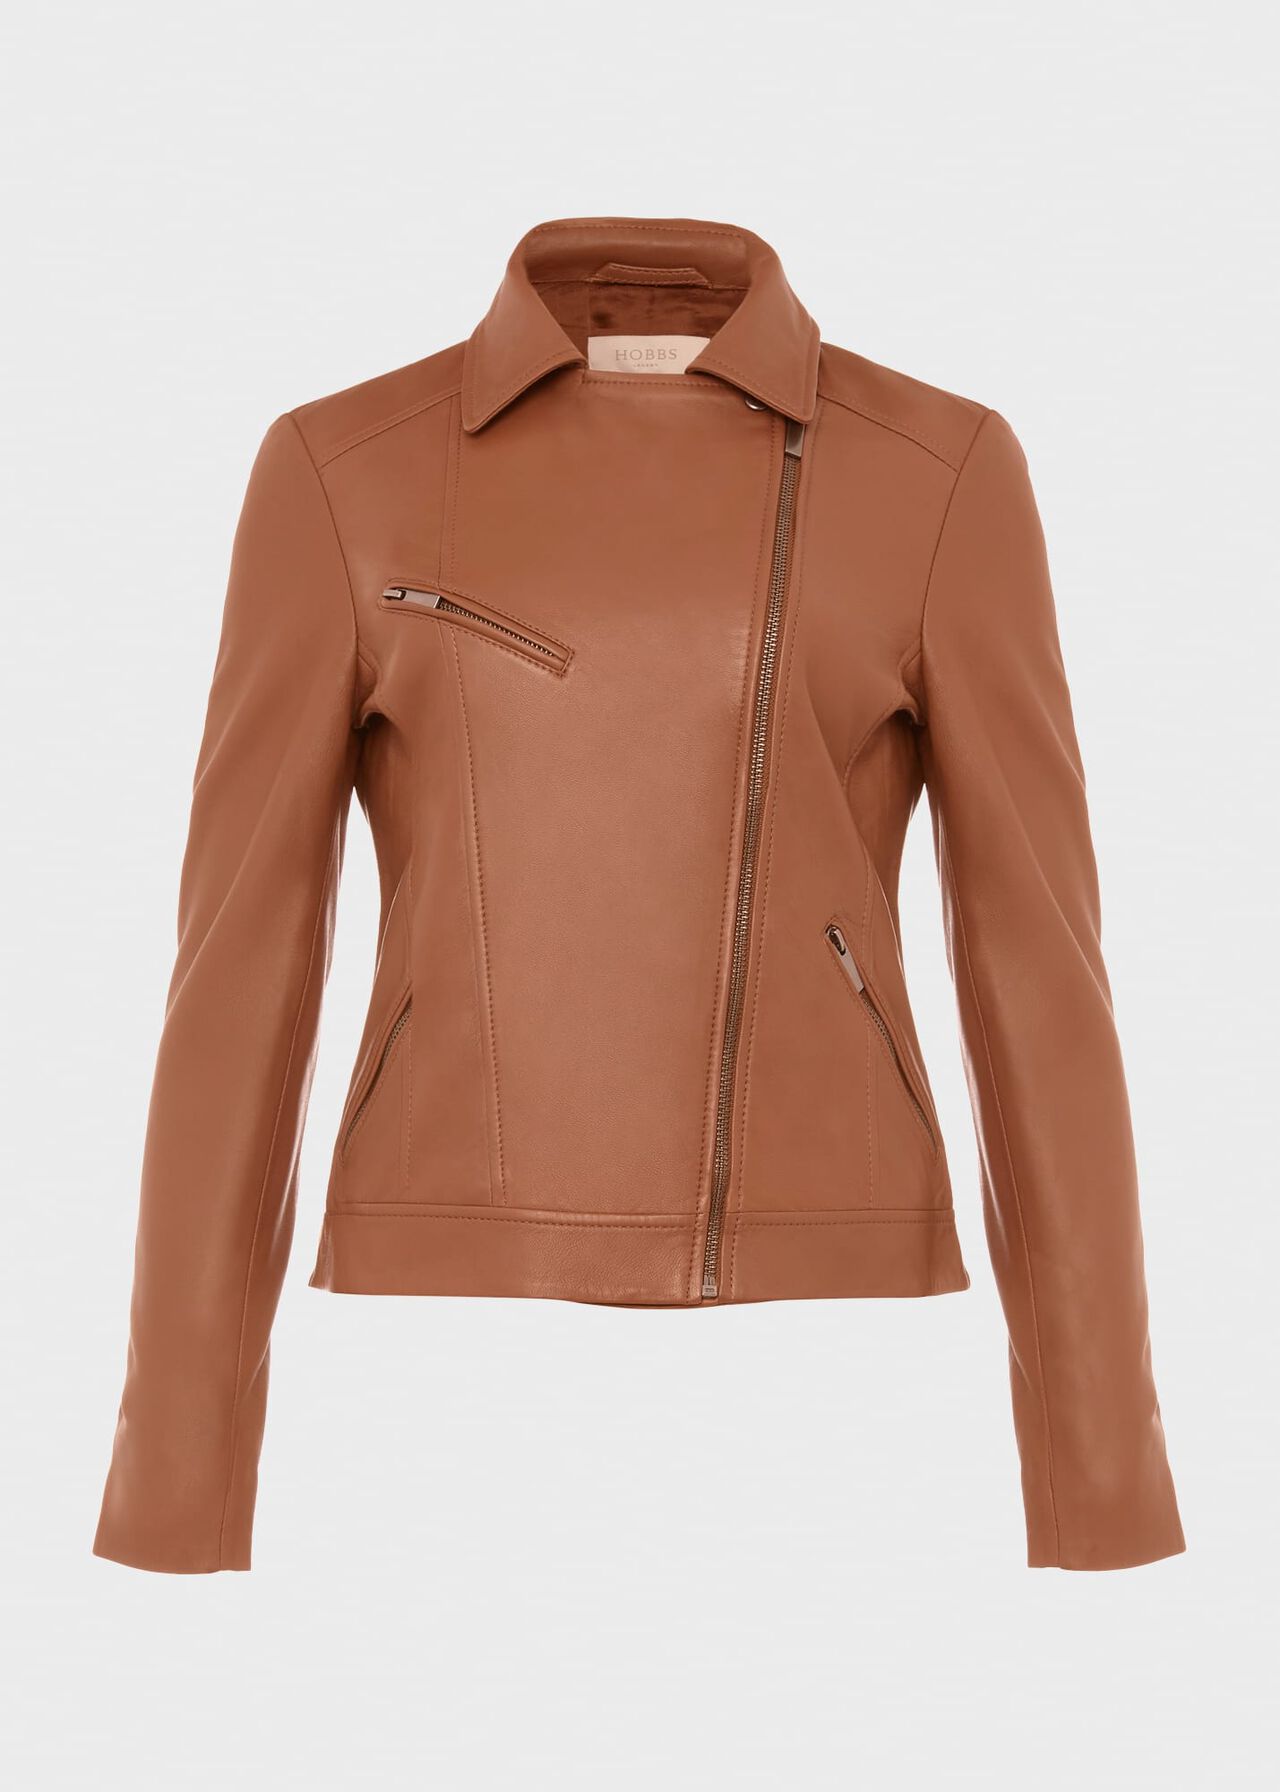 Dakota Leather Jacket, Tan, hi-res